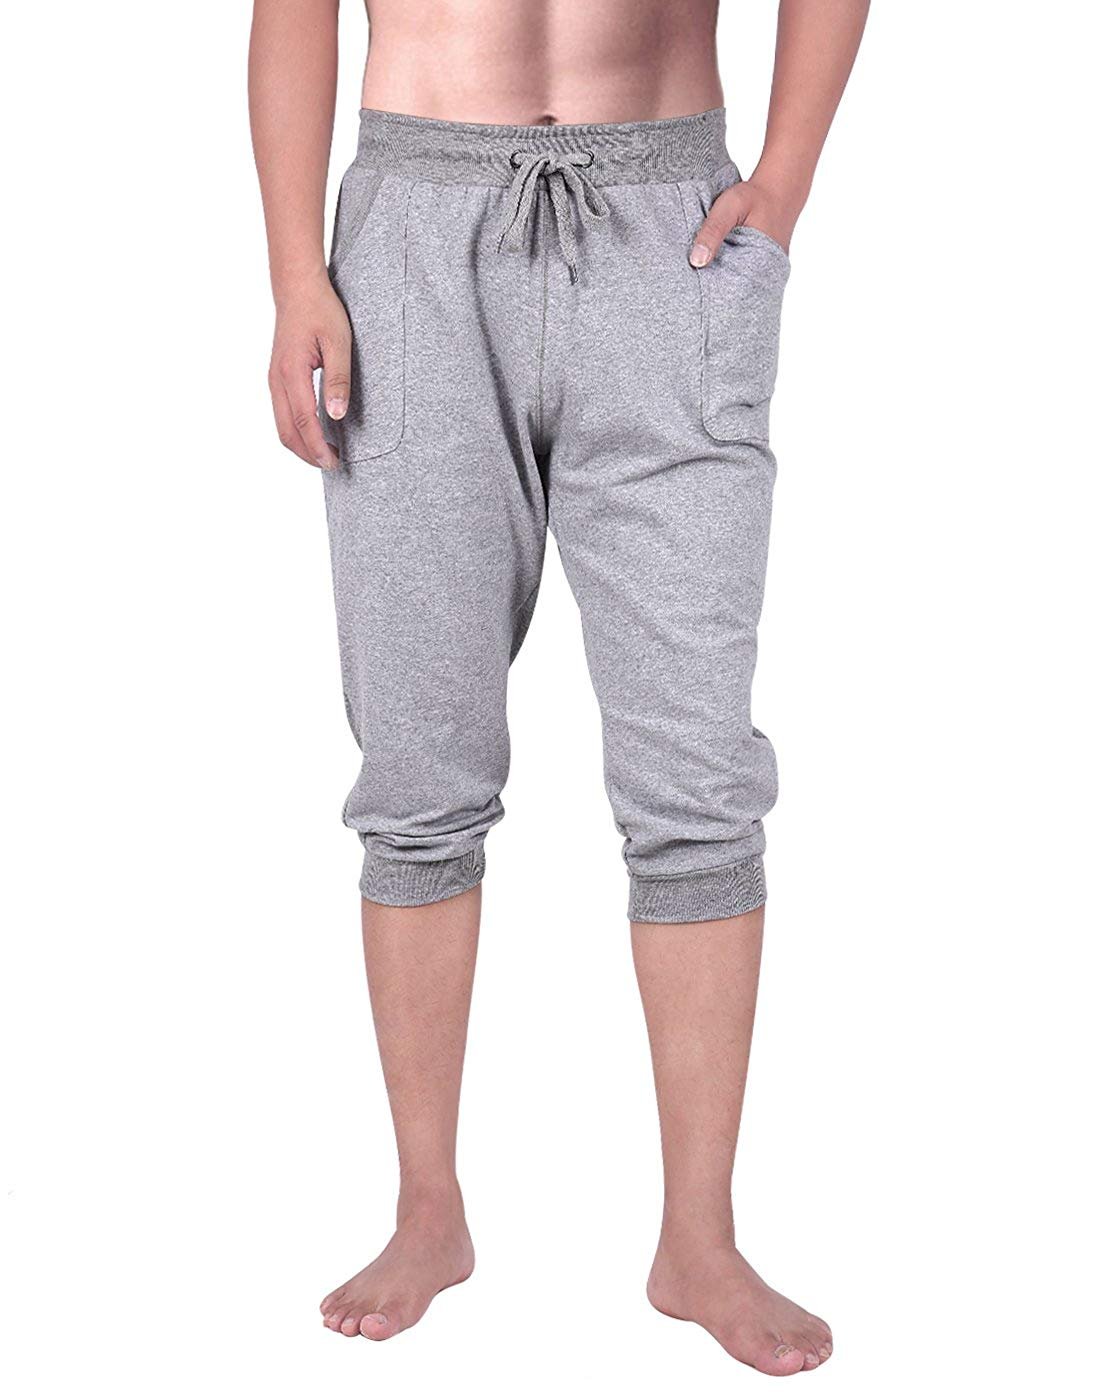 FANSHONN Mens Cotton Casual Shorts 3//4 Jogger Capri Pants Print Drawstring Breathable Short Pants with Elastic Waist